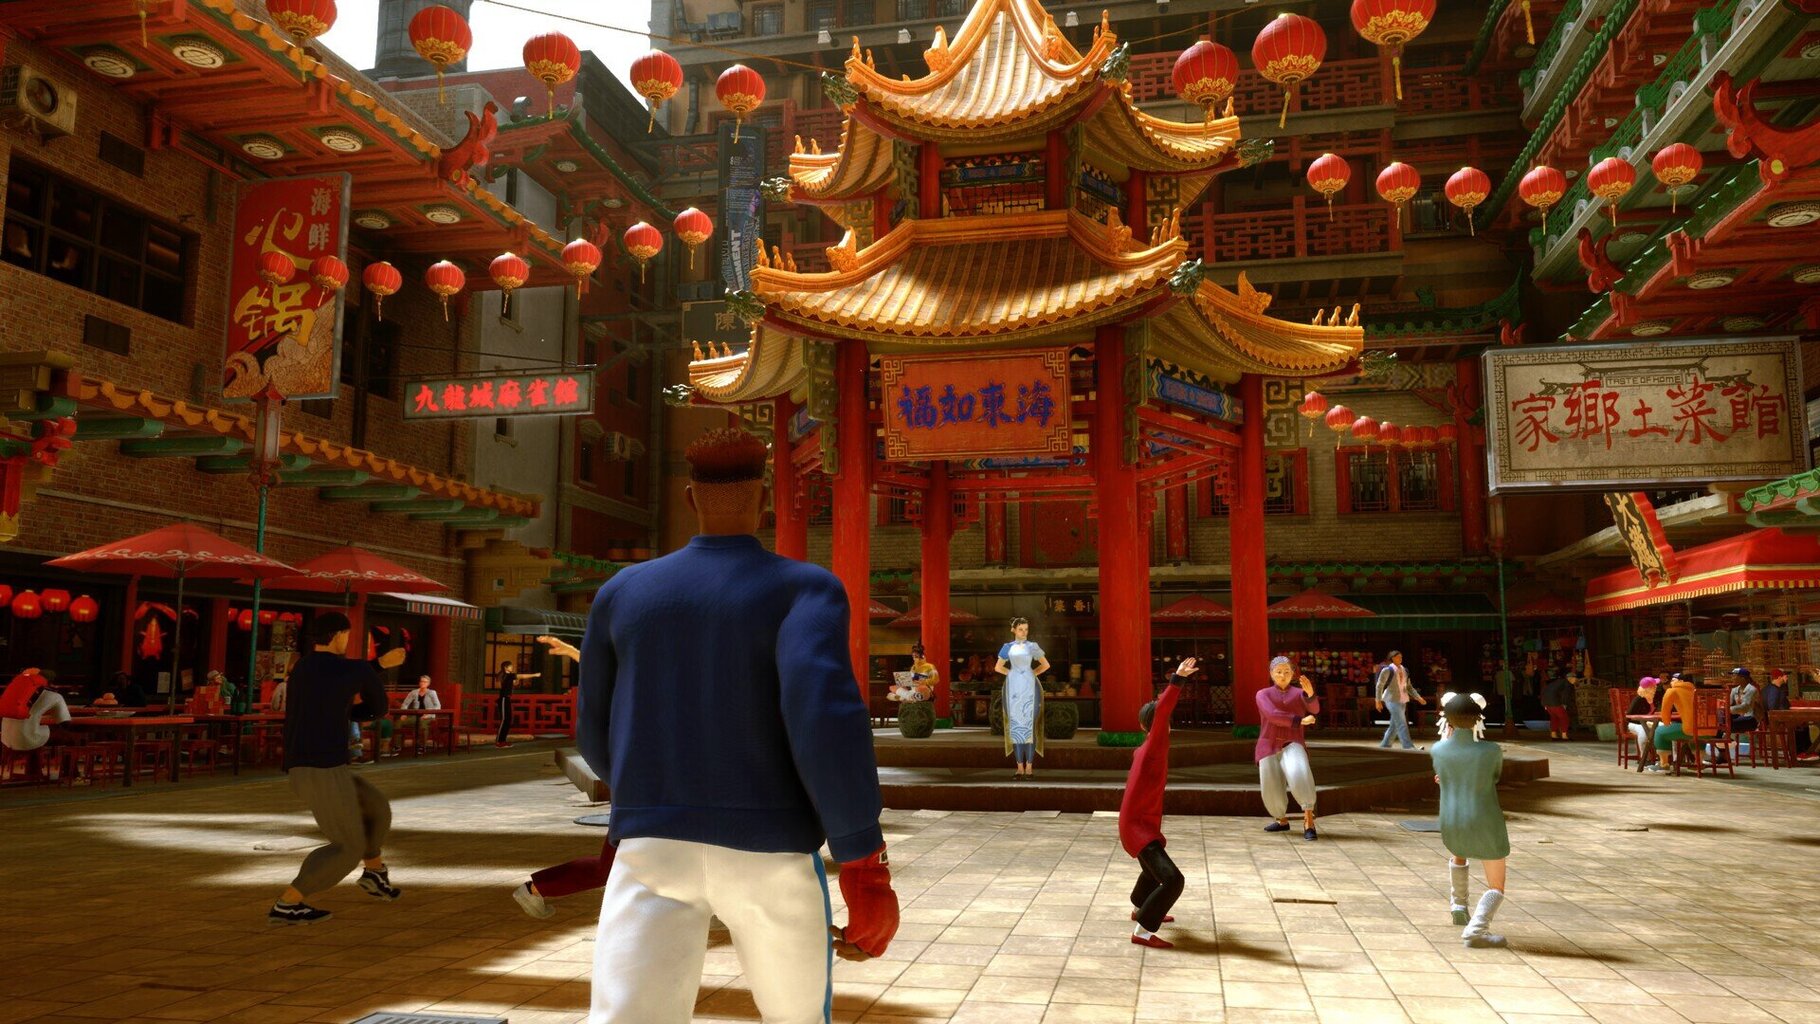 Street Fighter 6 - Mad Gear Box цена и информация | Datorspēles | 220.lv